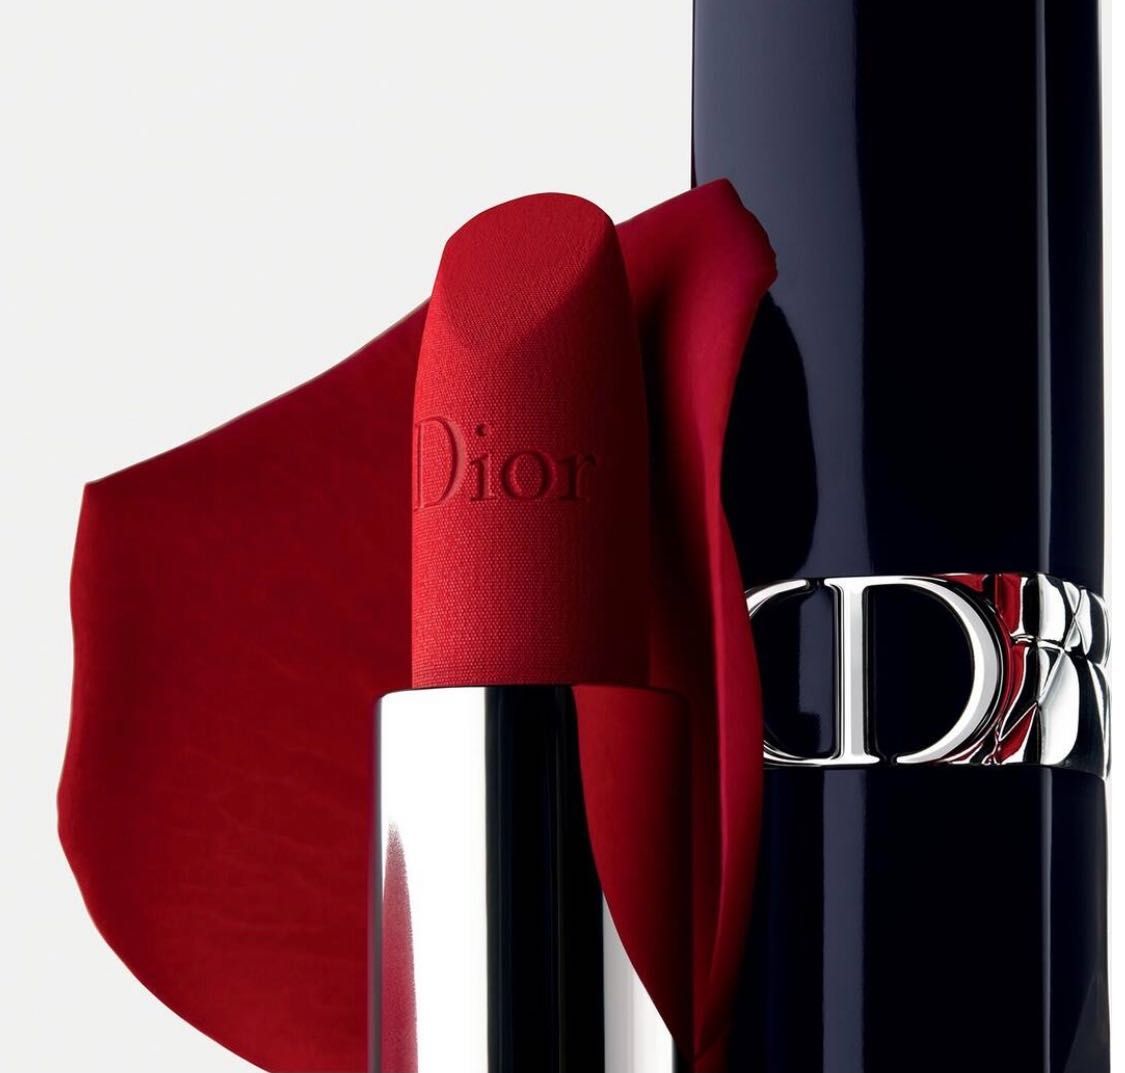 Ruj Dior floral lip care long wear